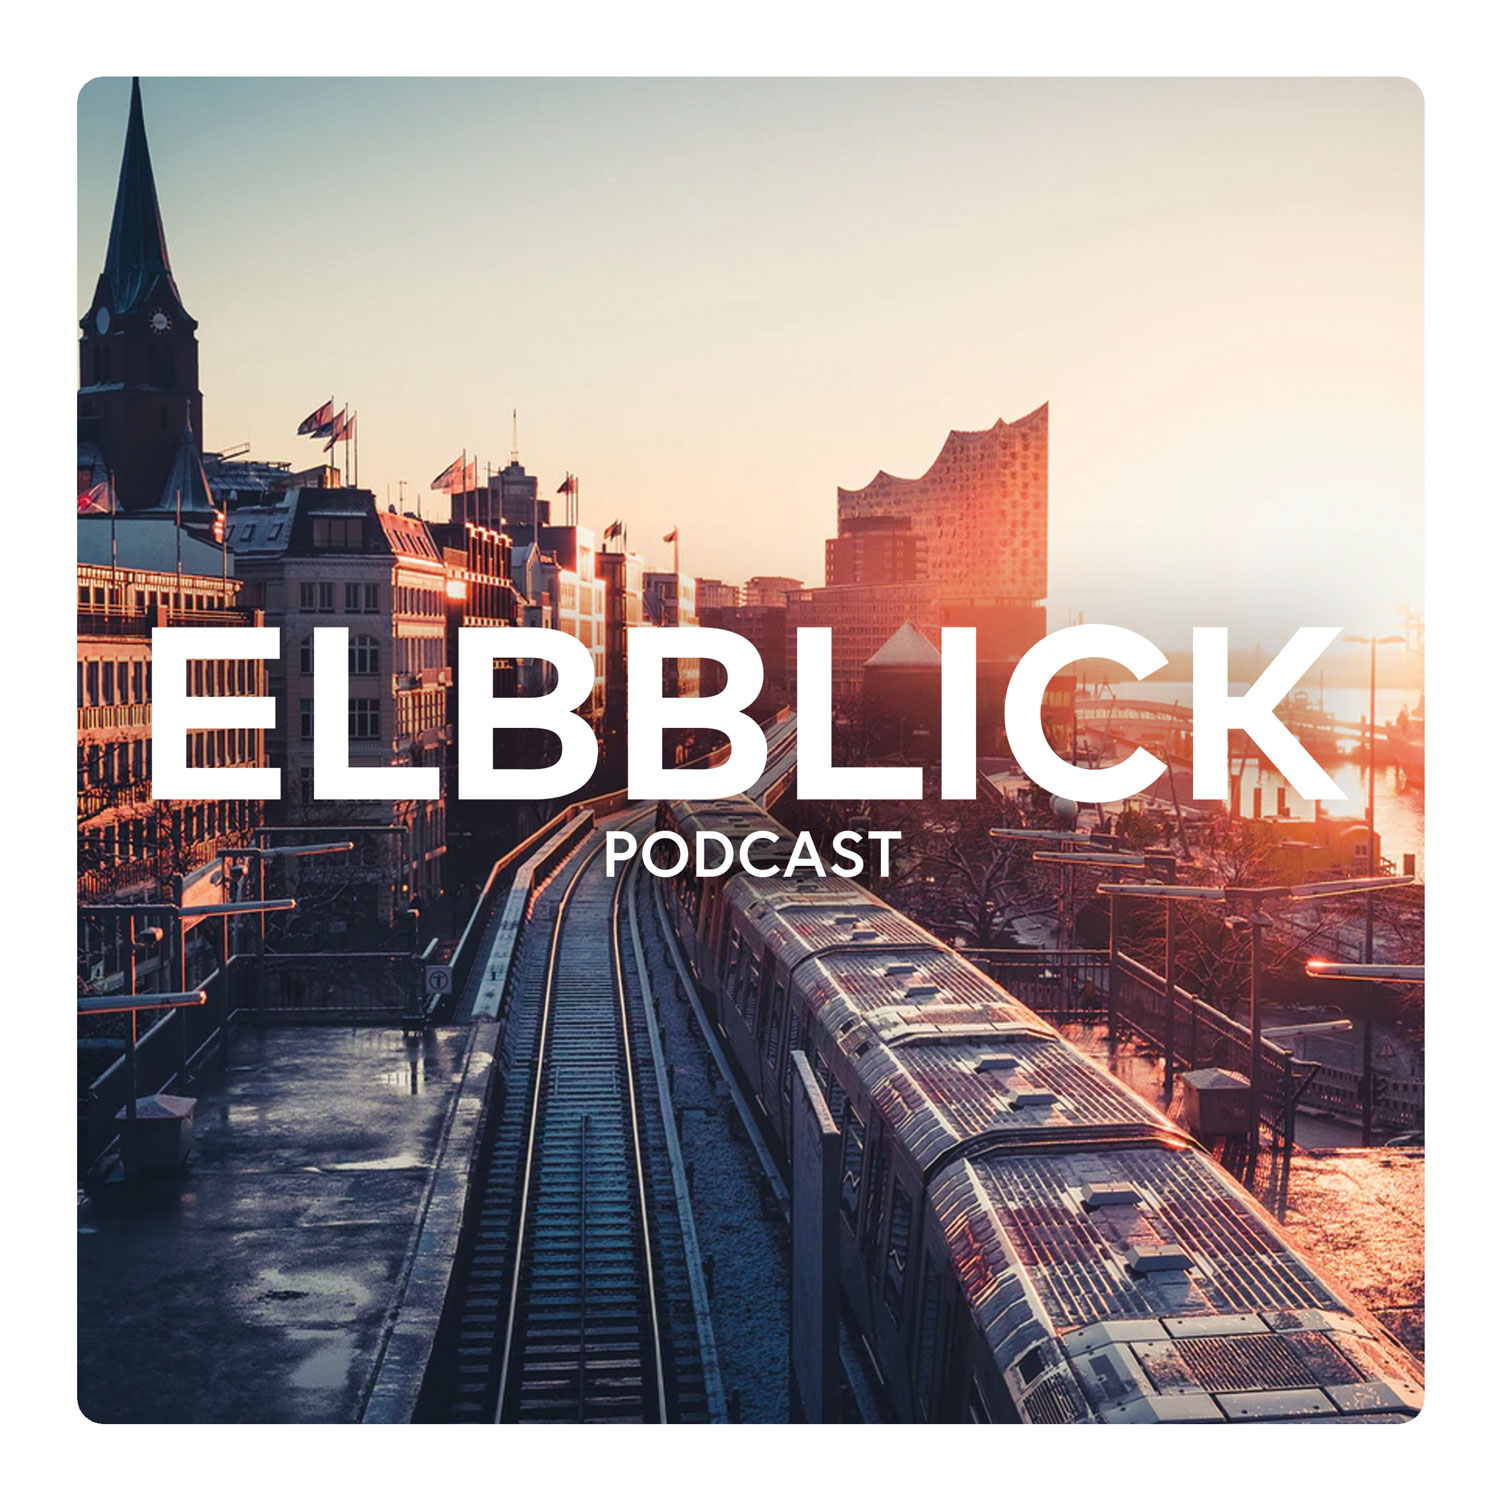 Elbblick Podcast